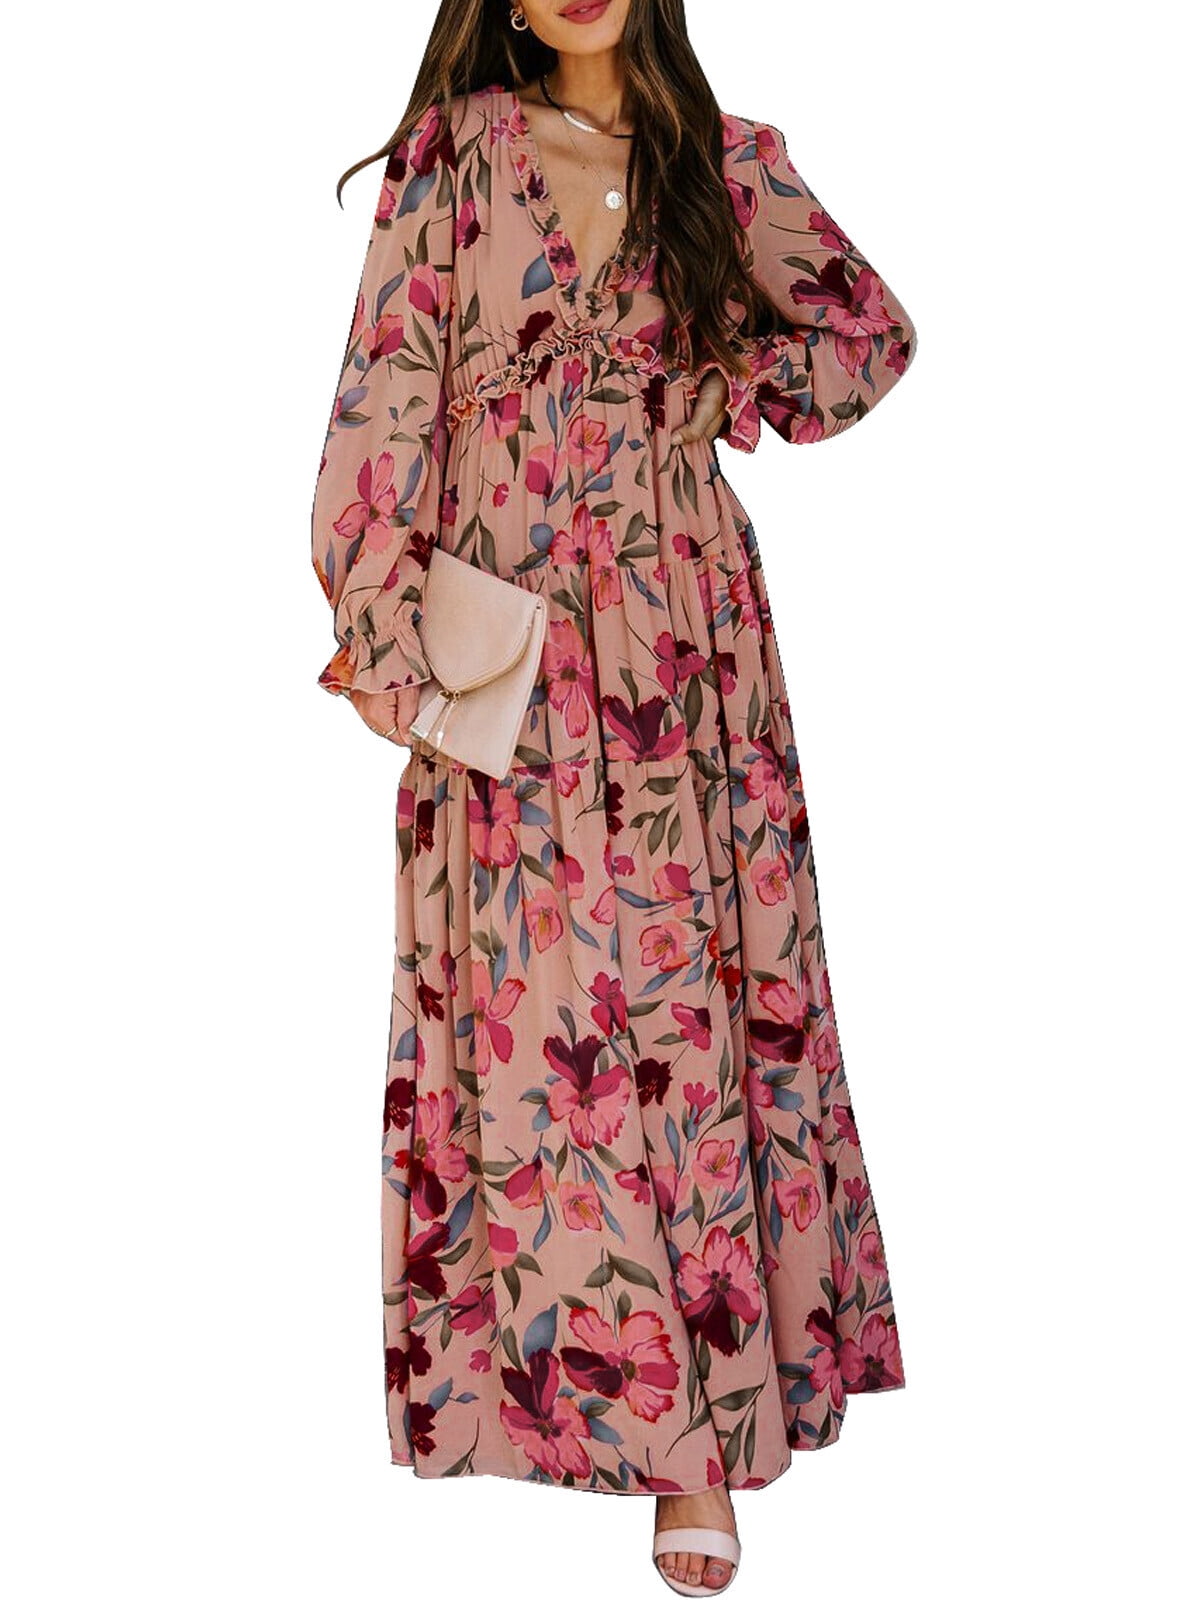 SHEWIN Womens Maxi Dress Boho Floral Print Casual Deep V Neck Long ...